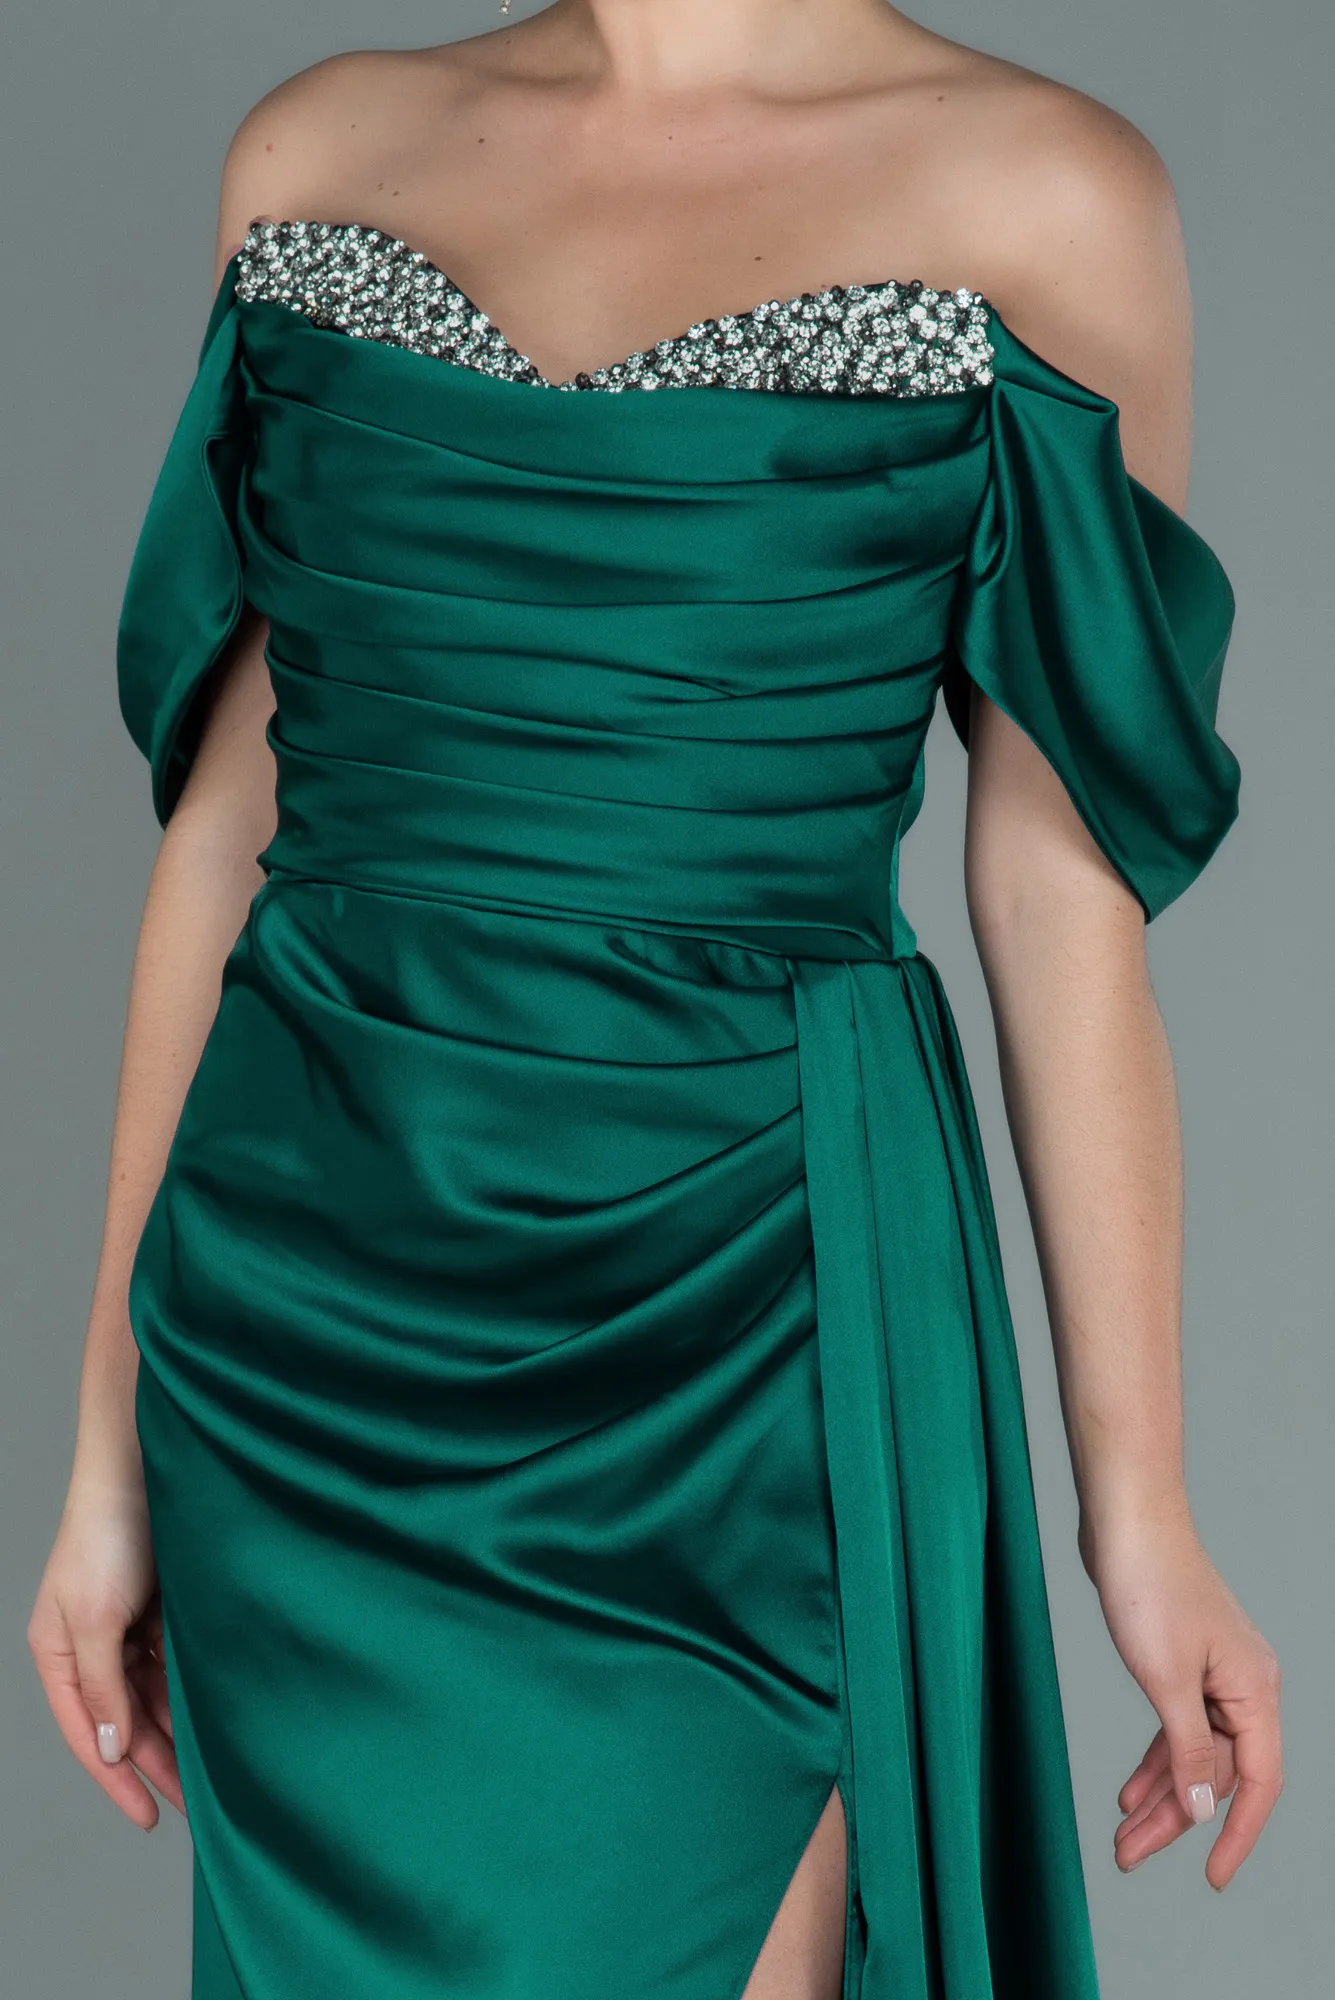 Emerald Green-Long Satin Evening Dress ABU2661